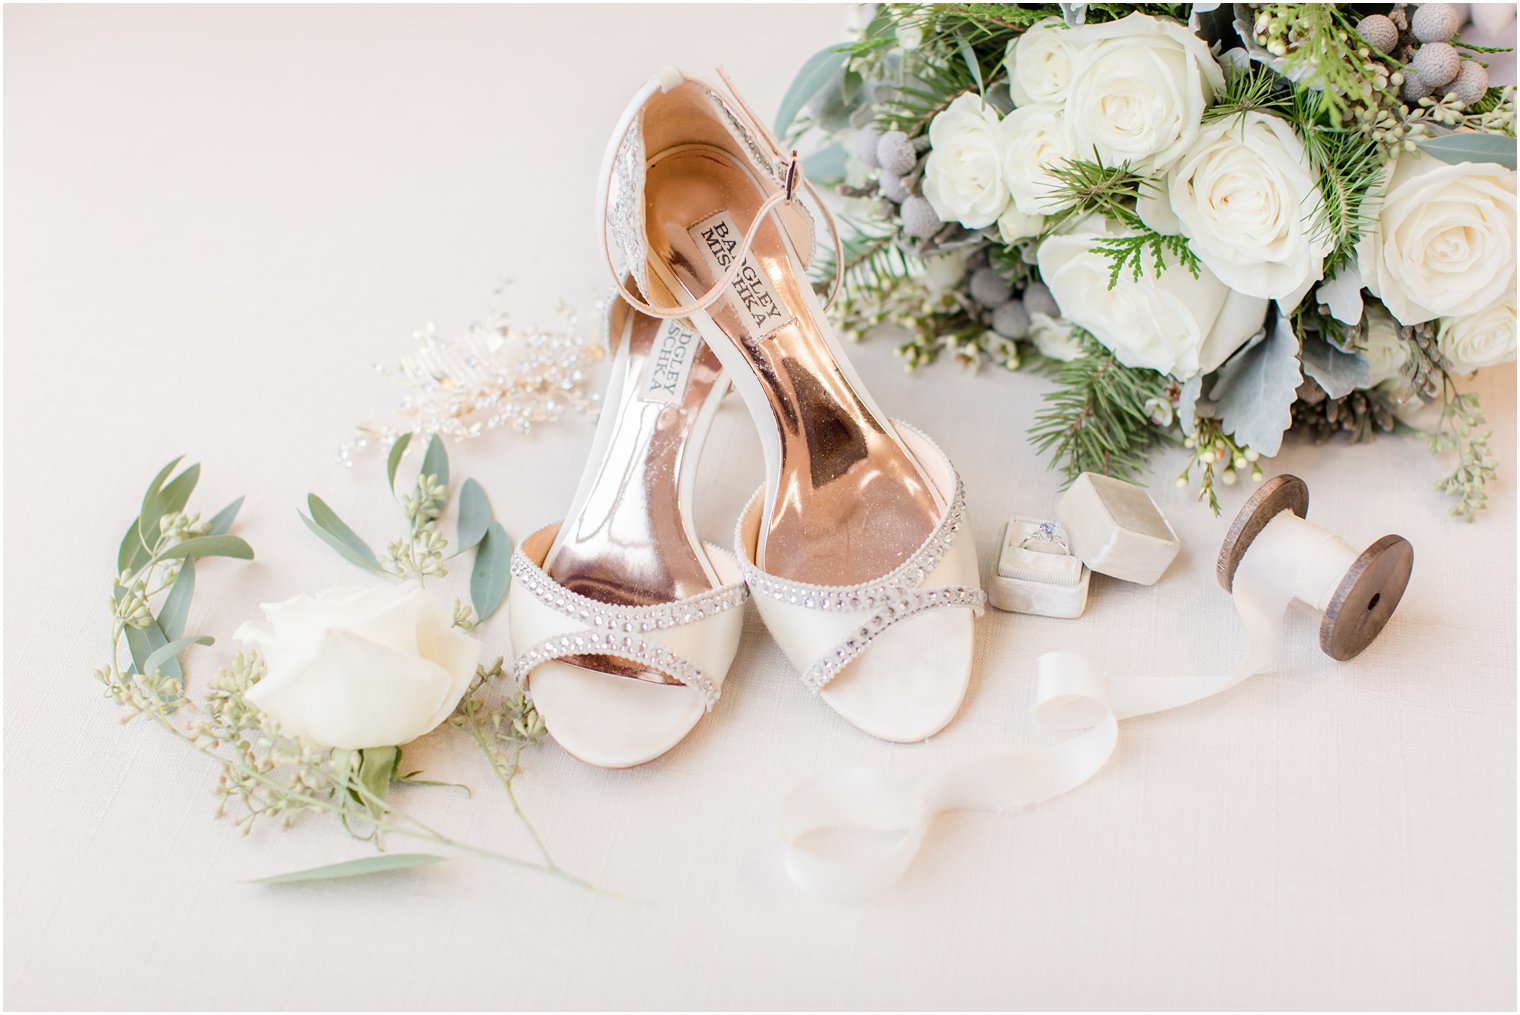 Bride's shoes by Badgley Mischka